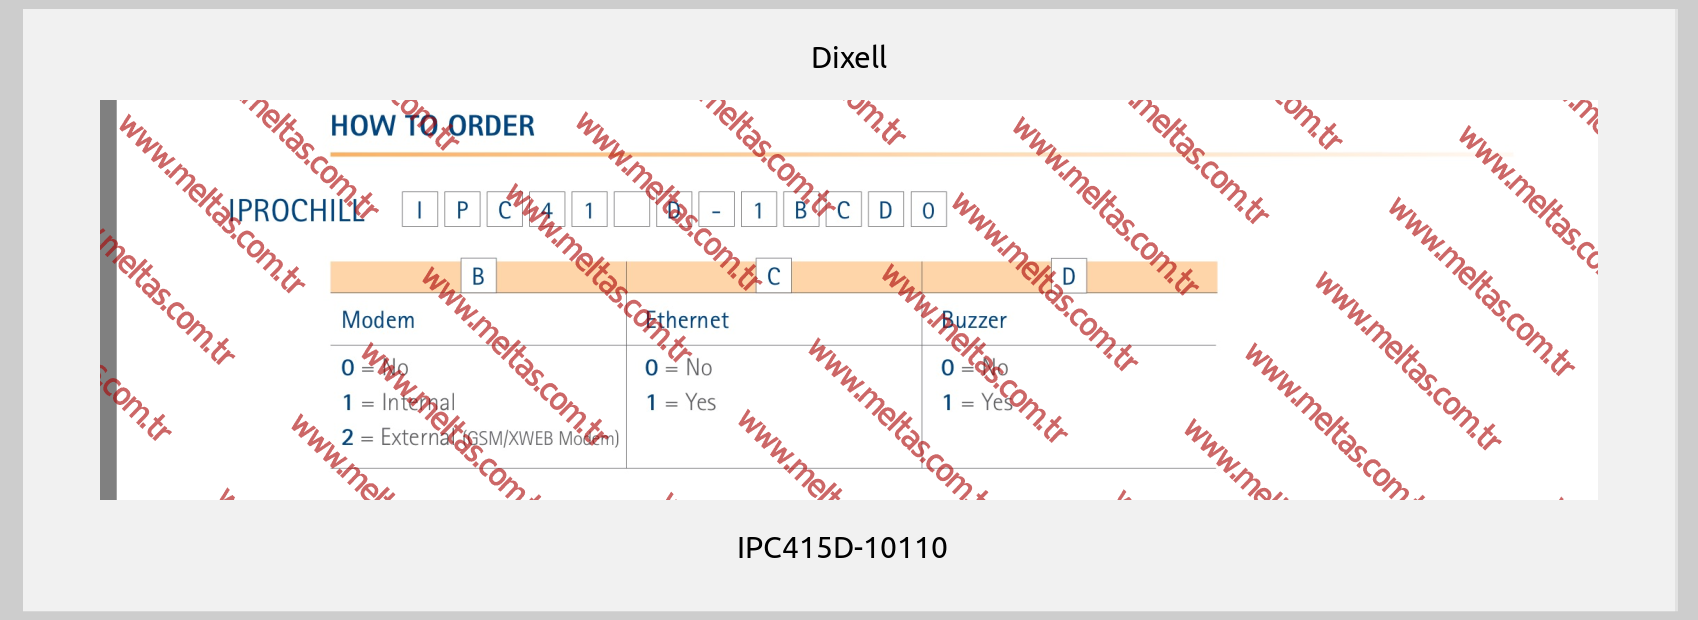 Dixell-IPC415D-10110  